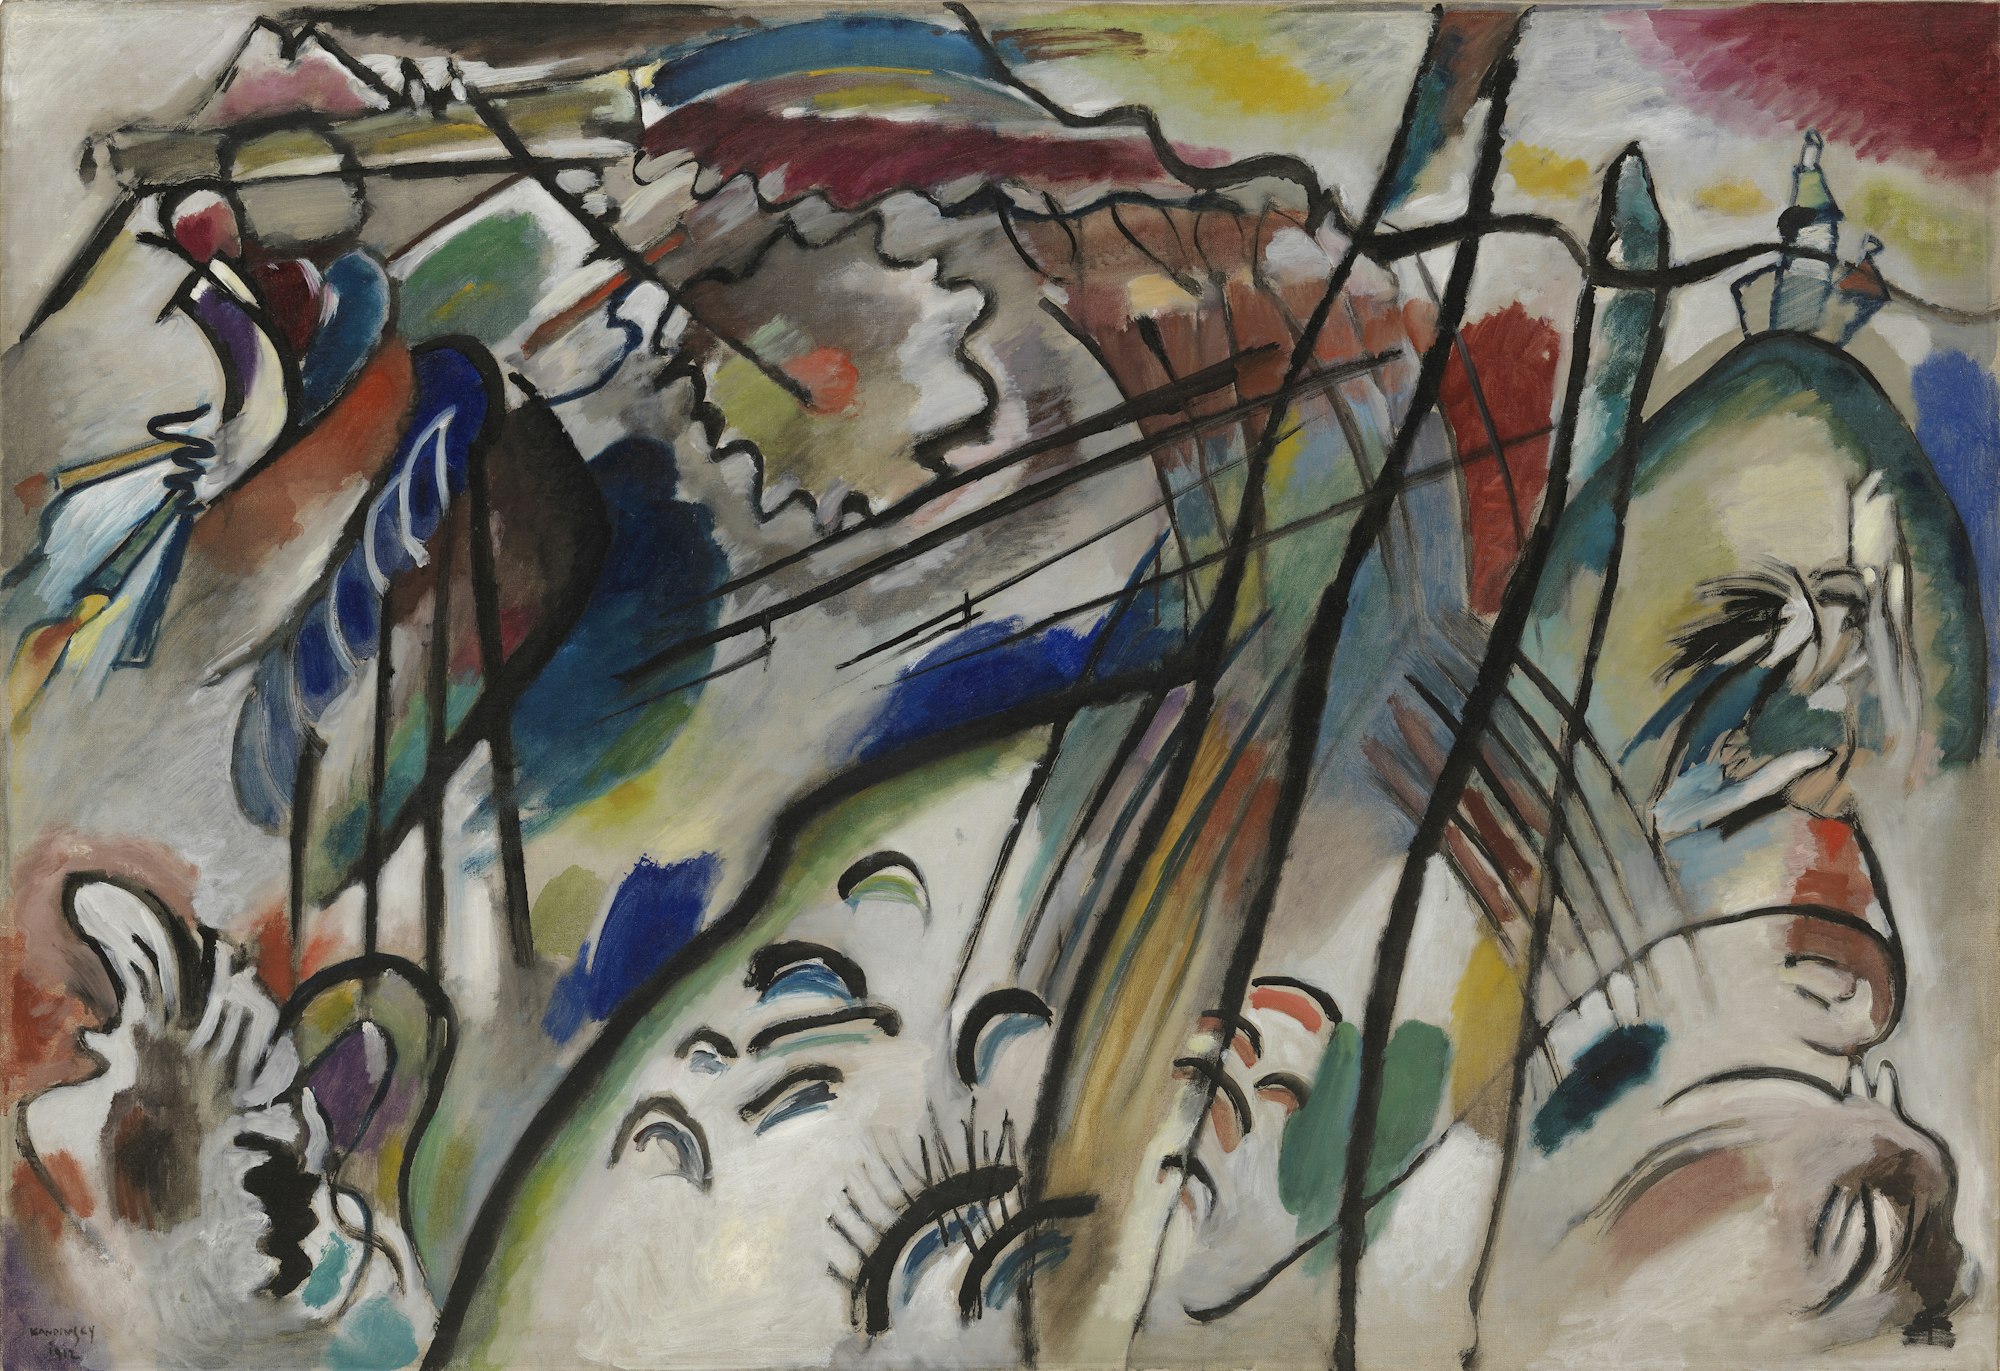 Vasily Kandinsky Improvisation 28 (Second Version), 1912